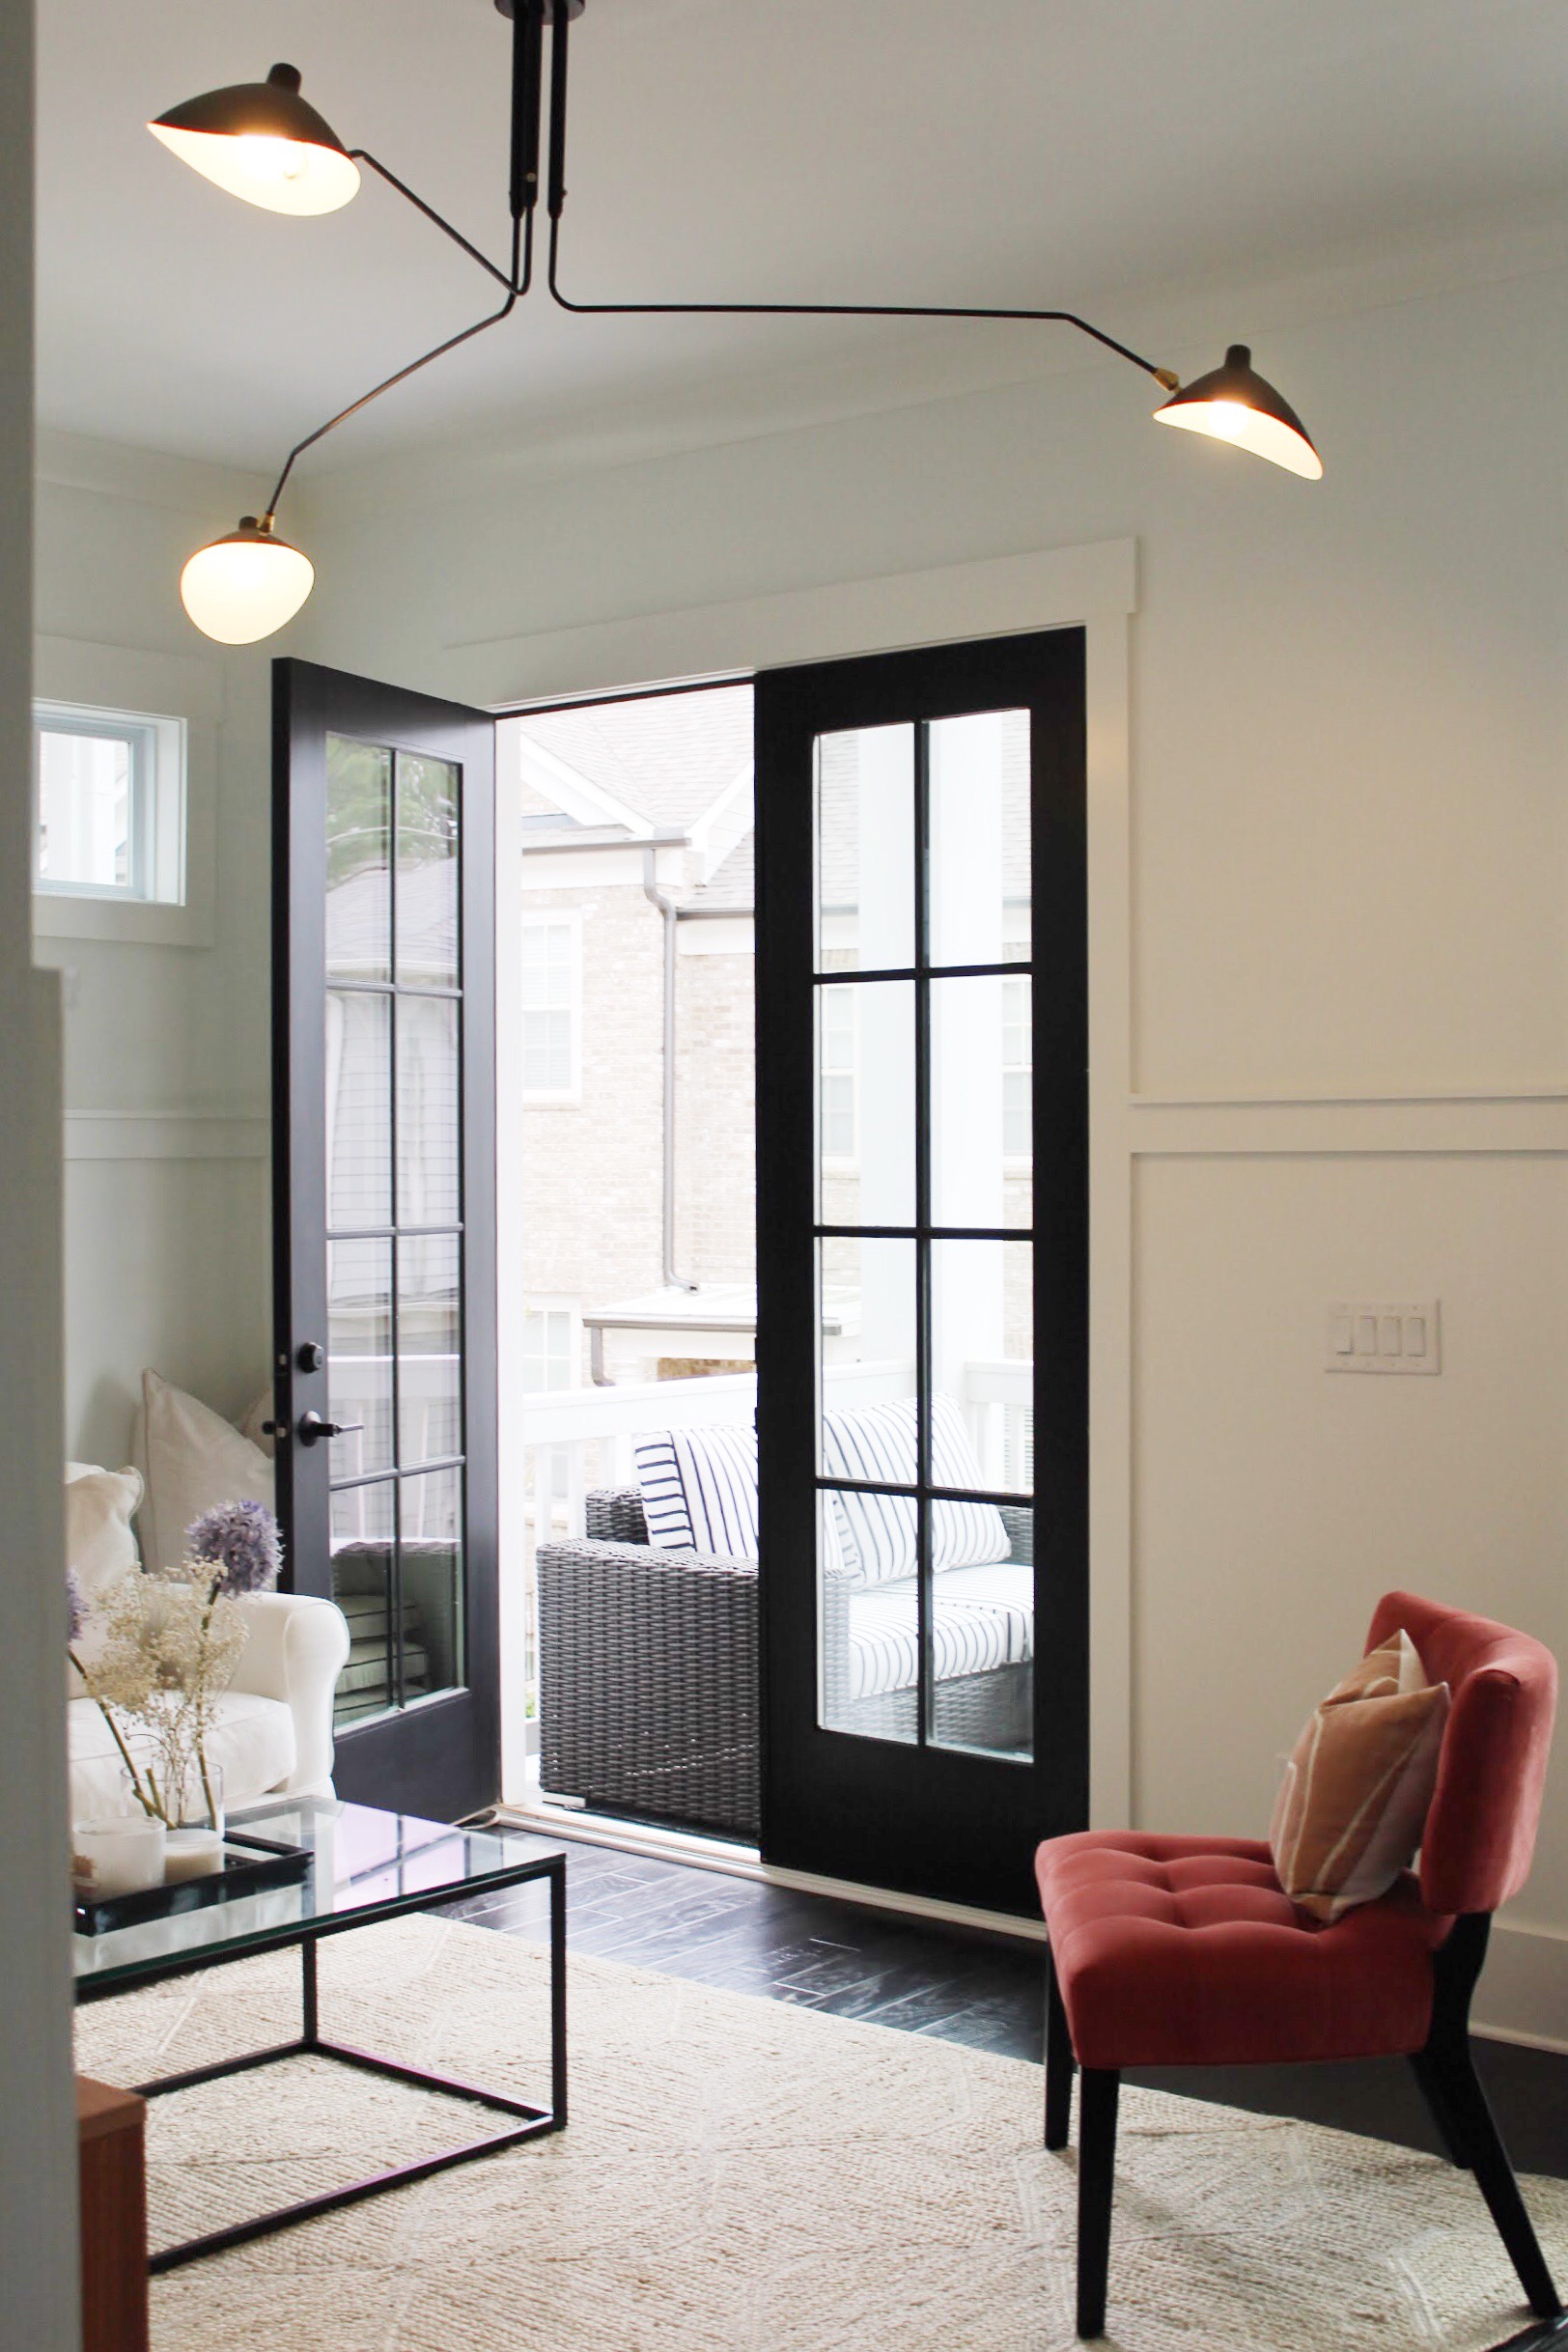 Decorating a New Home - Design Tips - Zardozi Magazine - Living Room